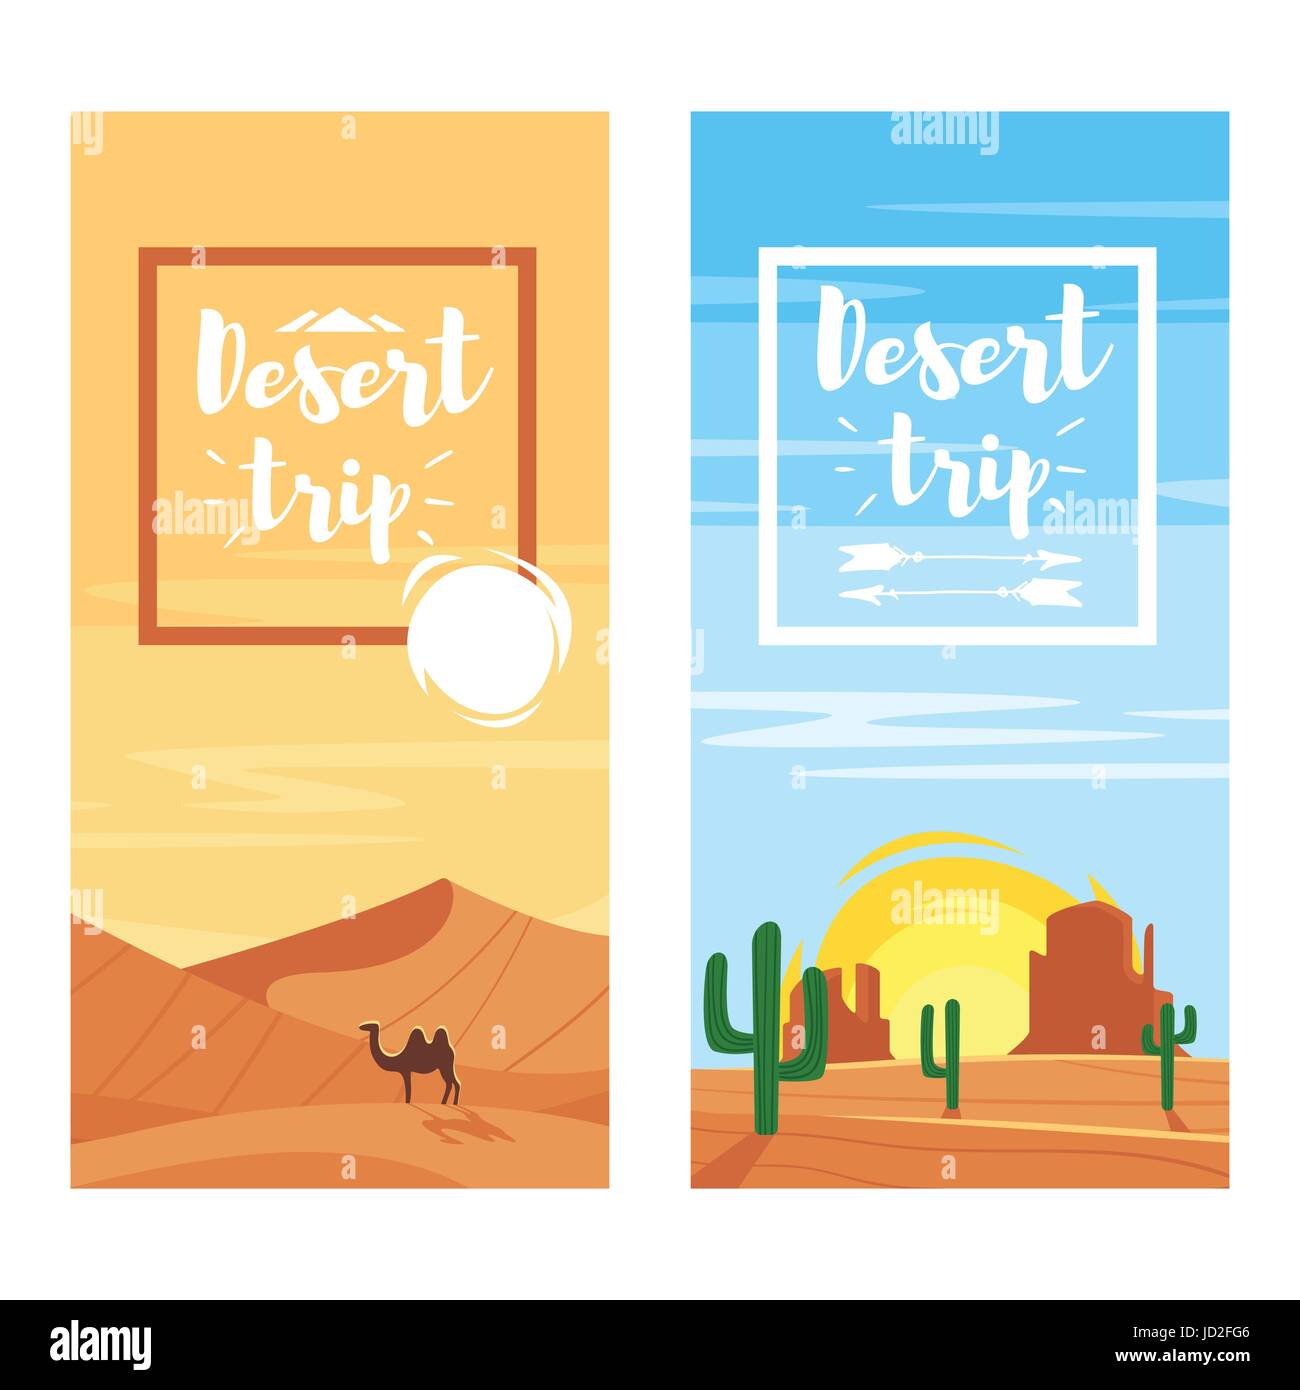 Vector cartoon style template for flyers for desert trip. Desert landscapes. Stock Vector